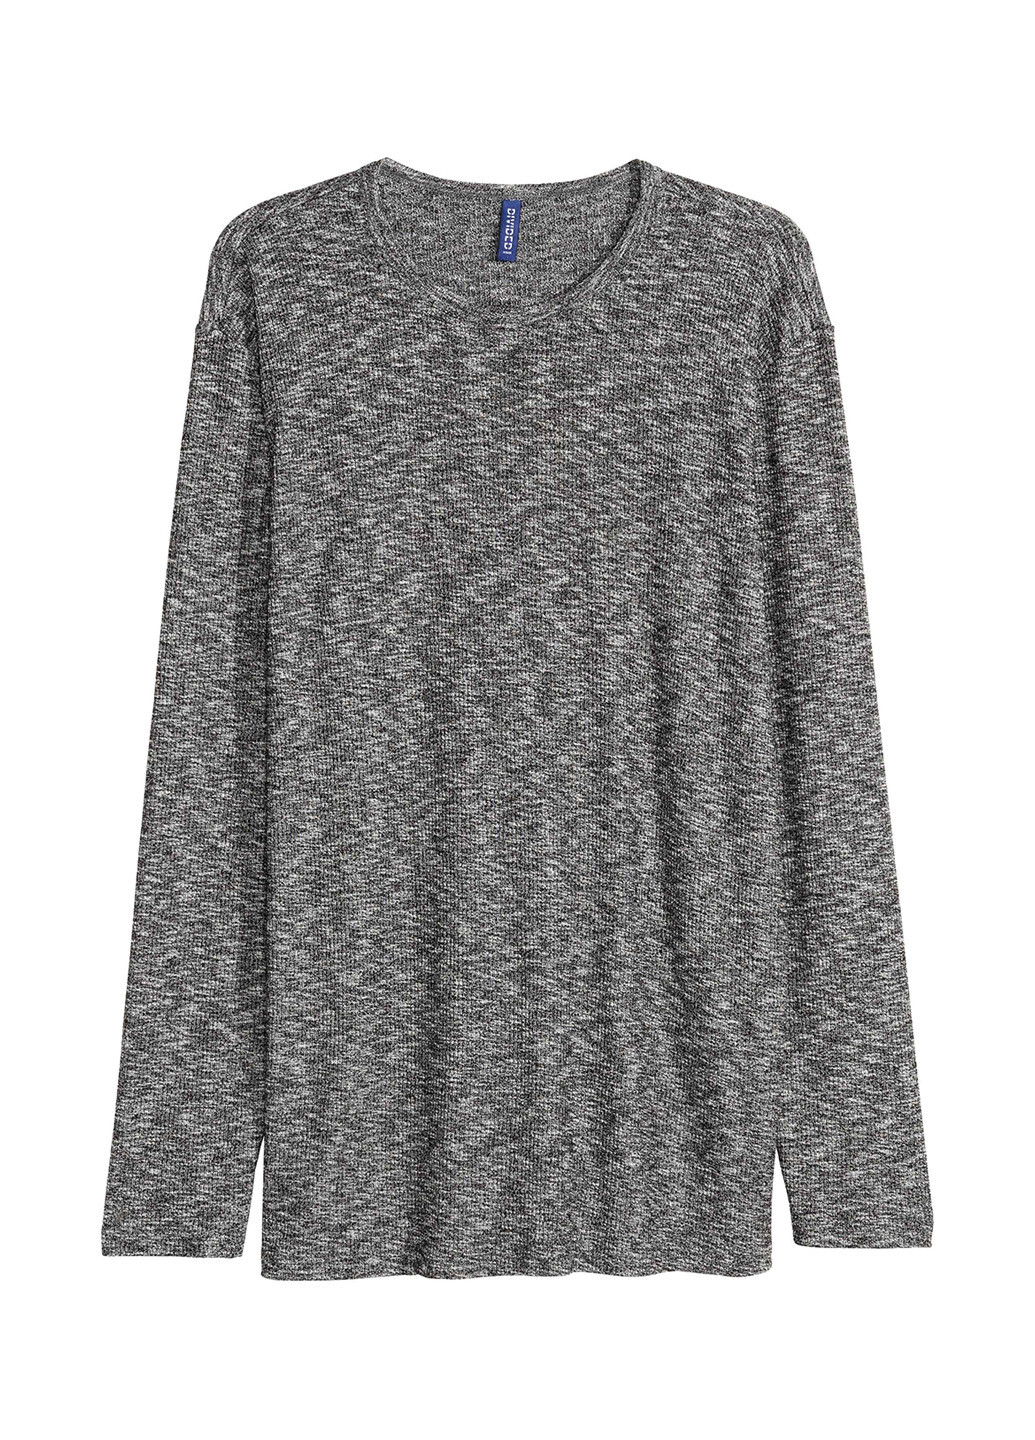 Серый демисезонный свитер джемпер H&M